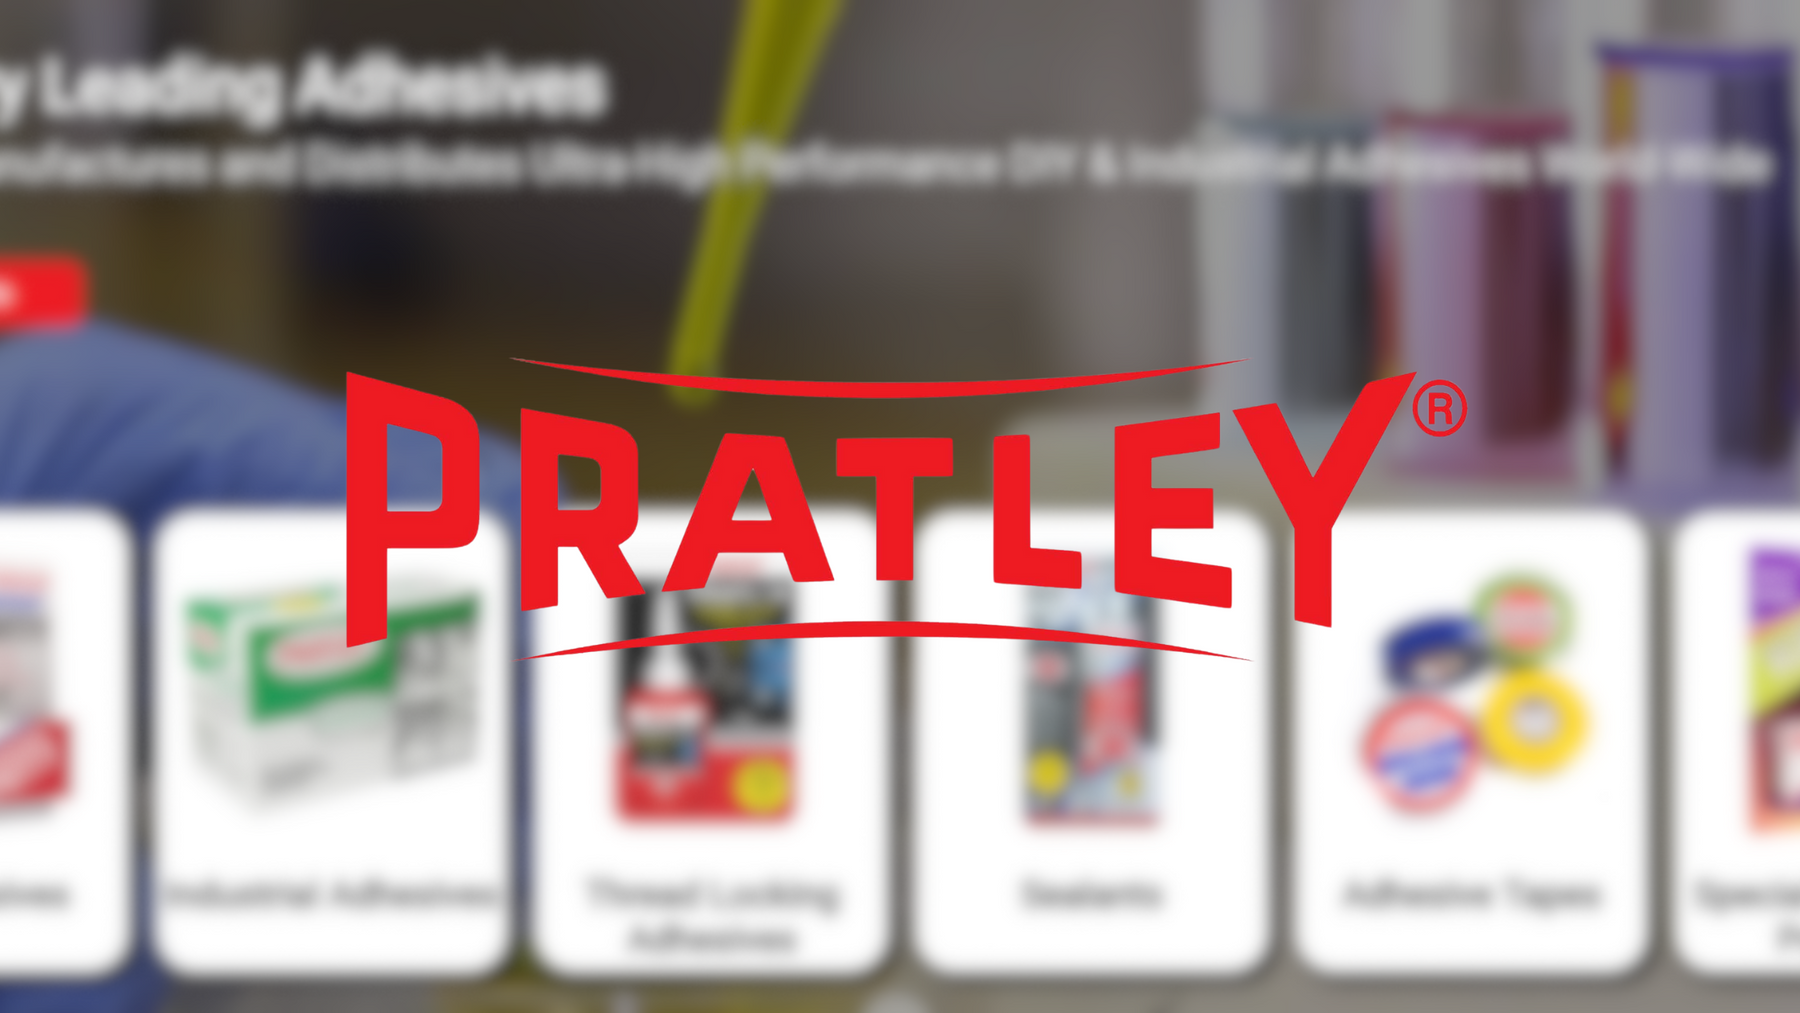 Pratley Putty is Back!